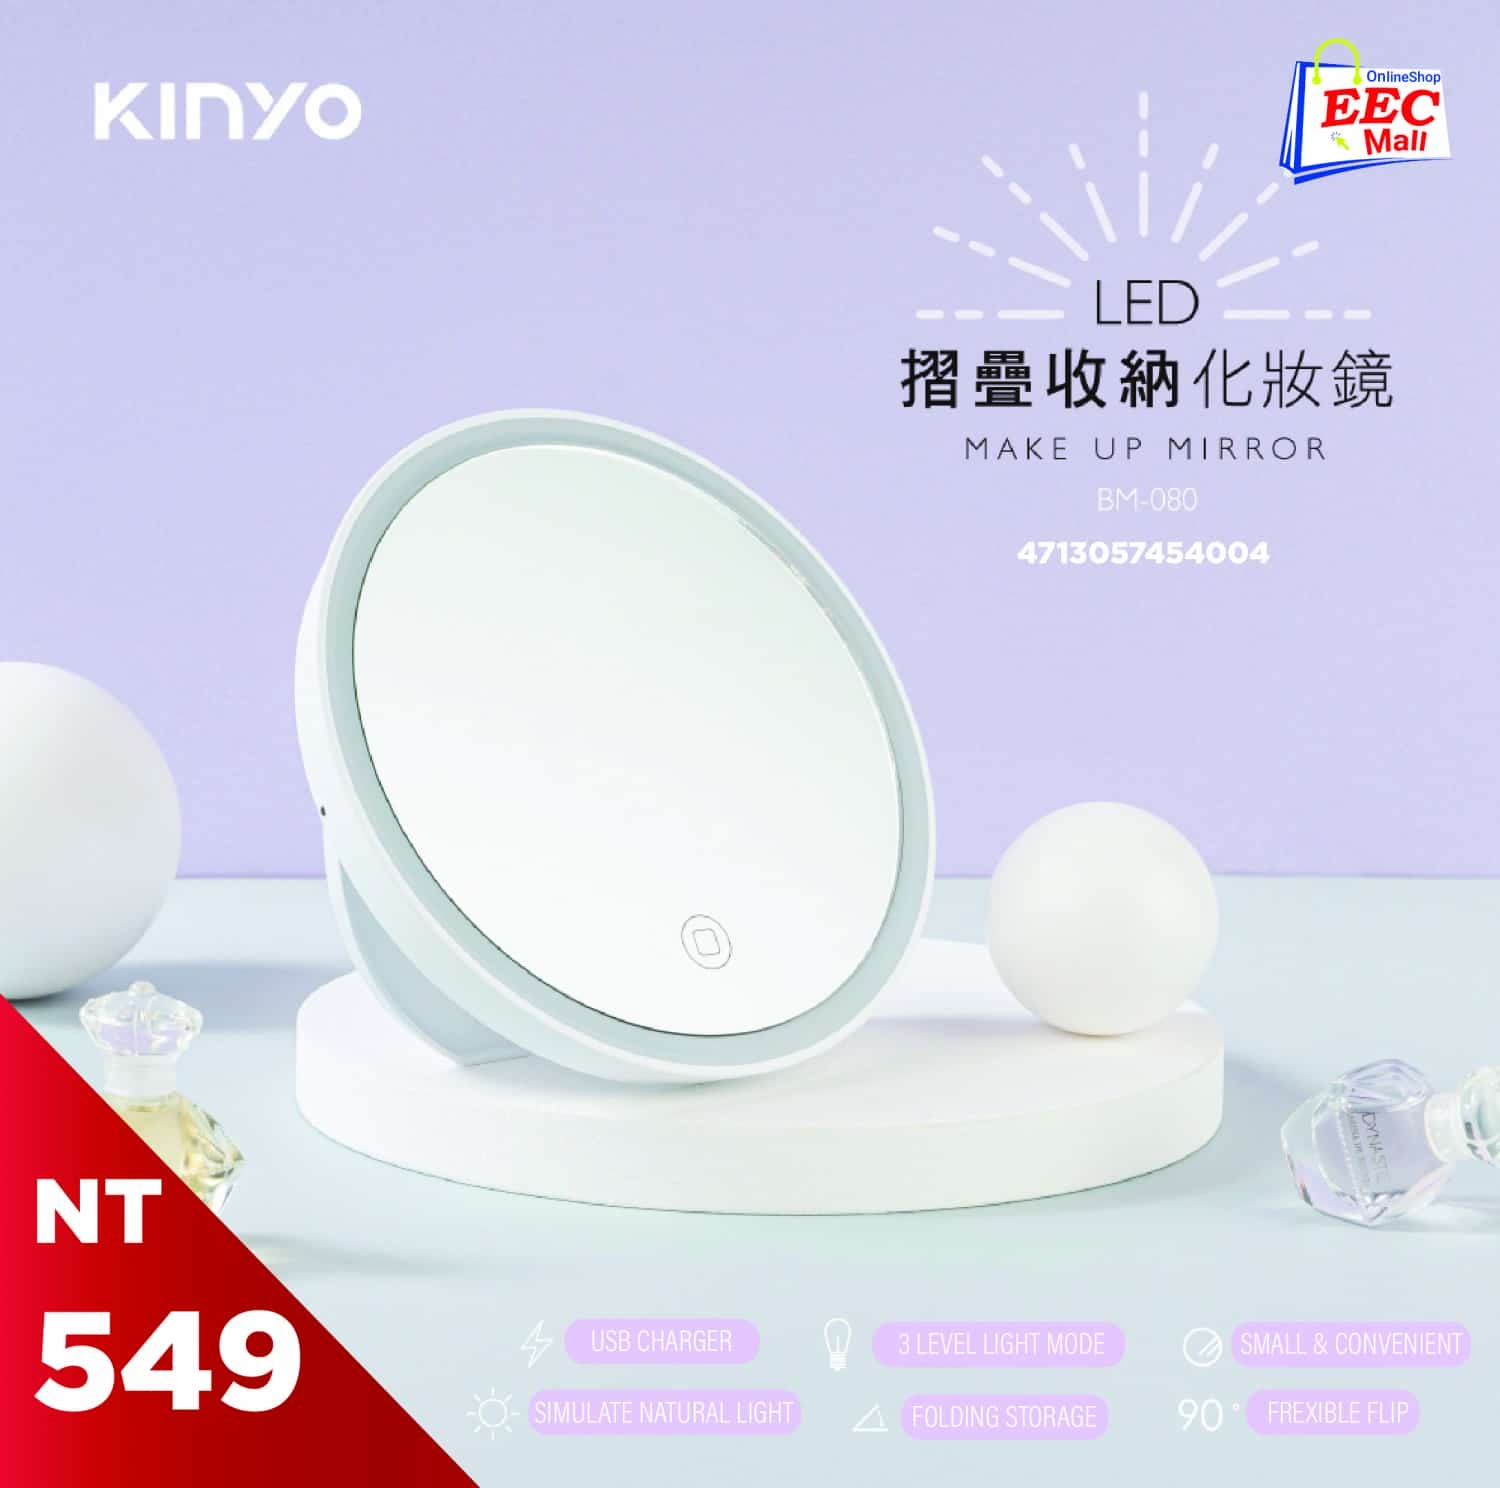 KINYO Make Up Mirror